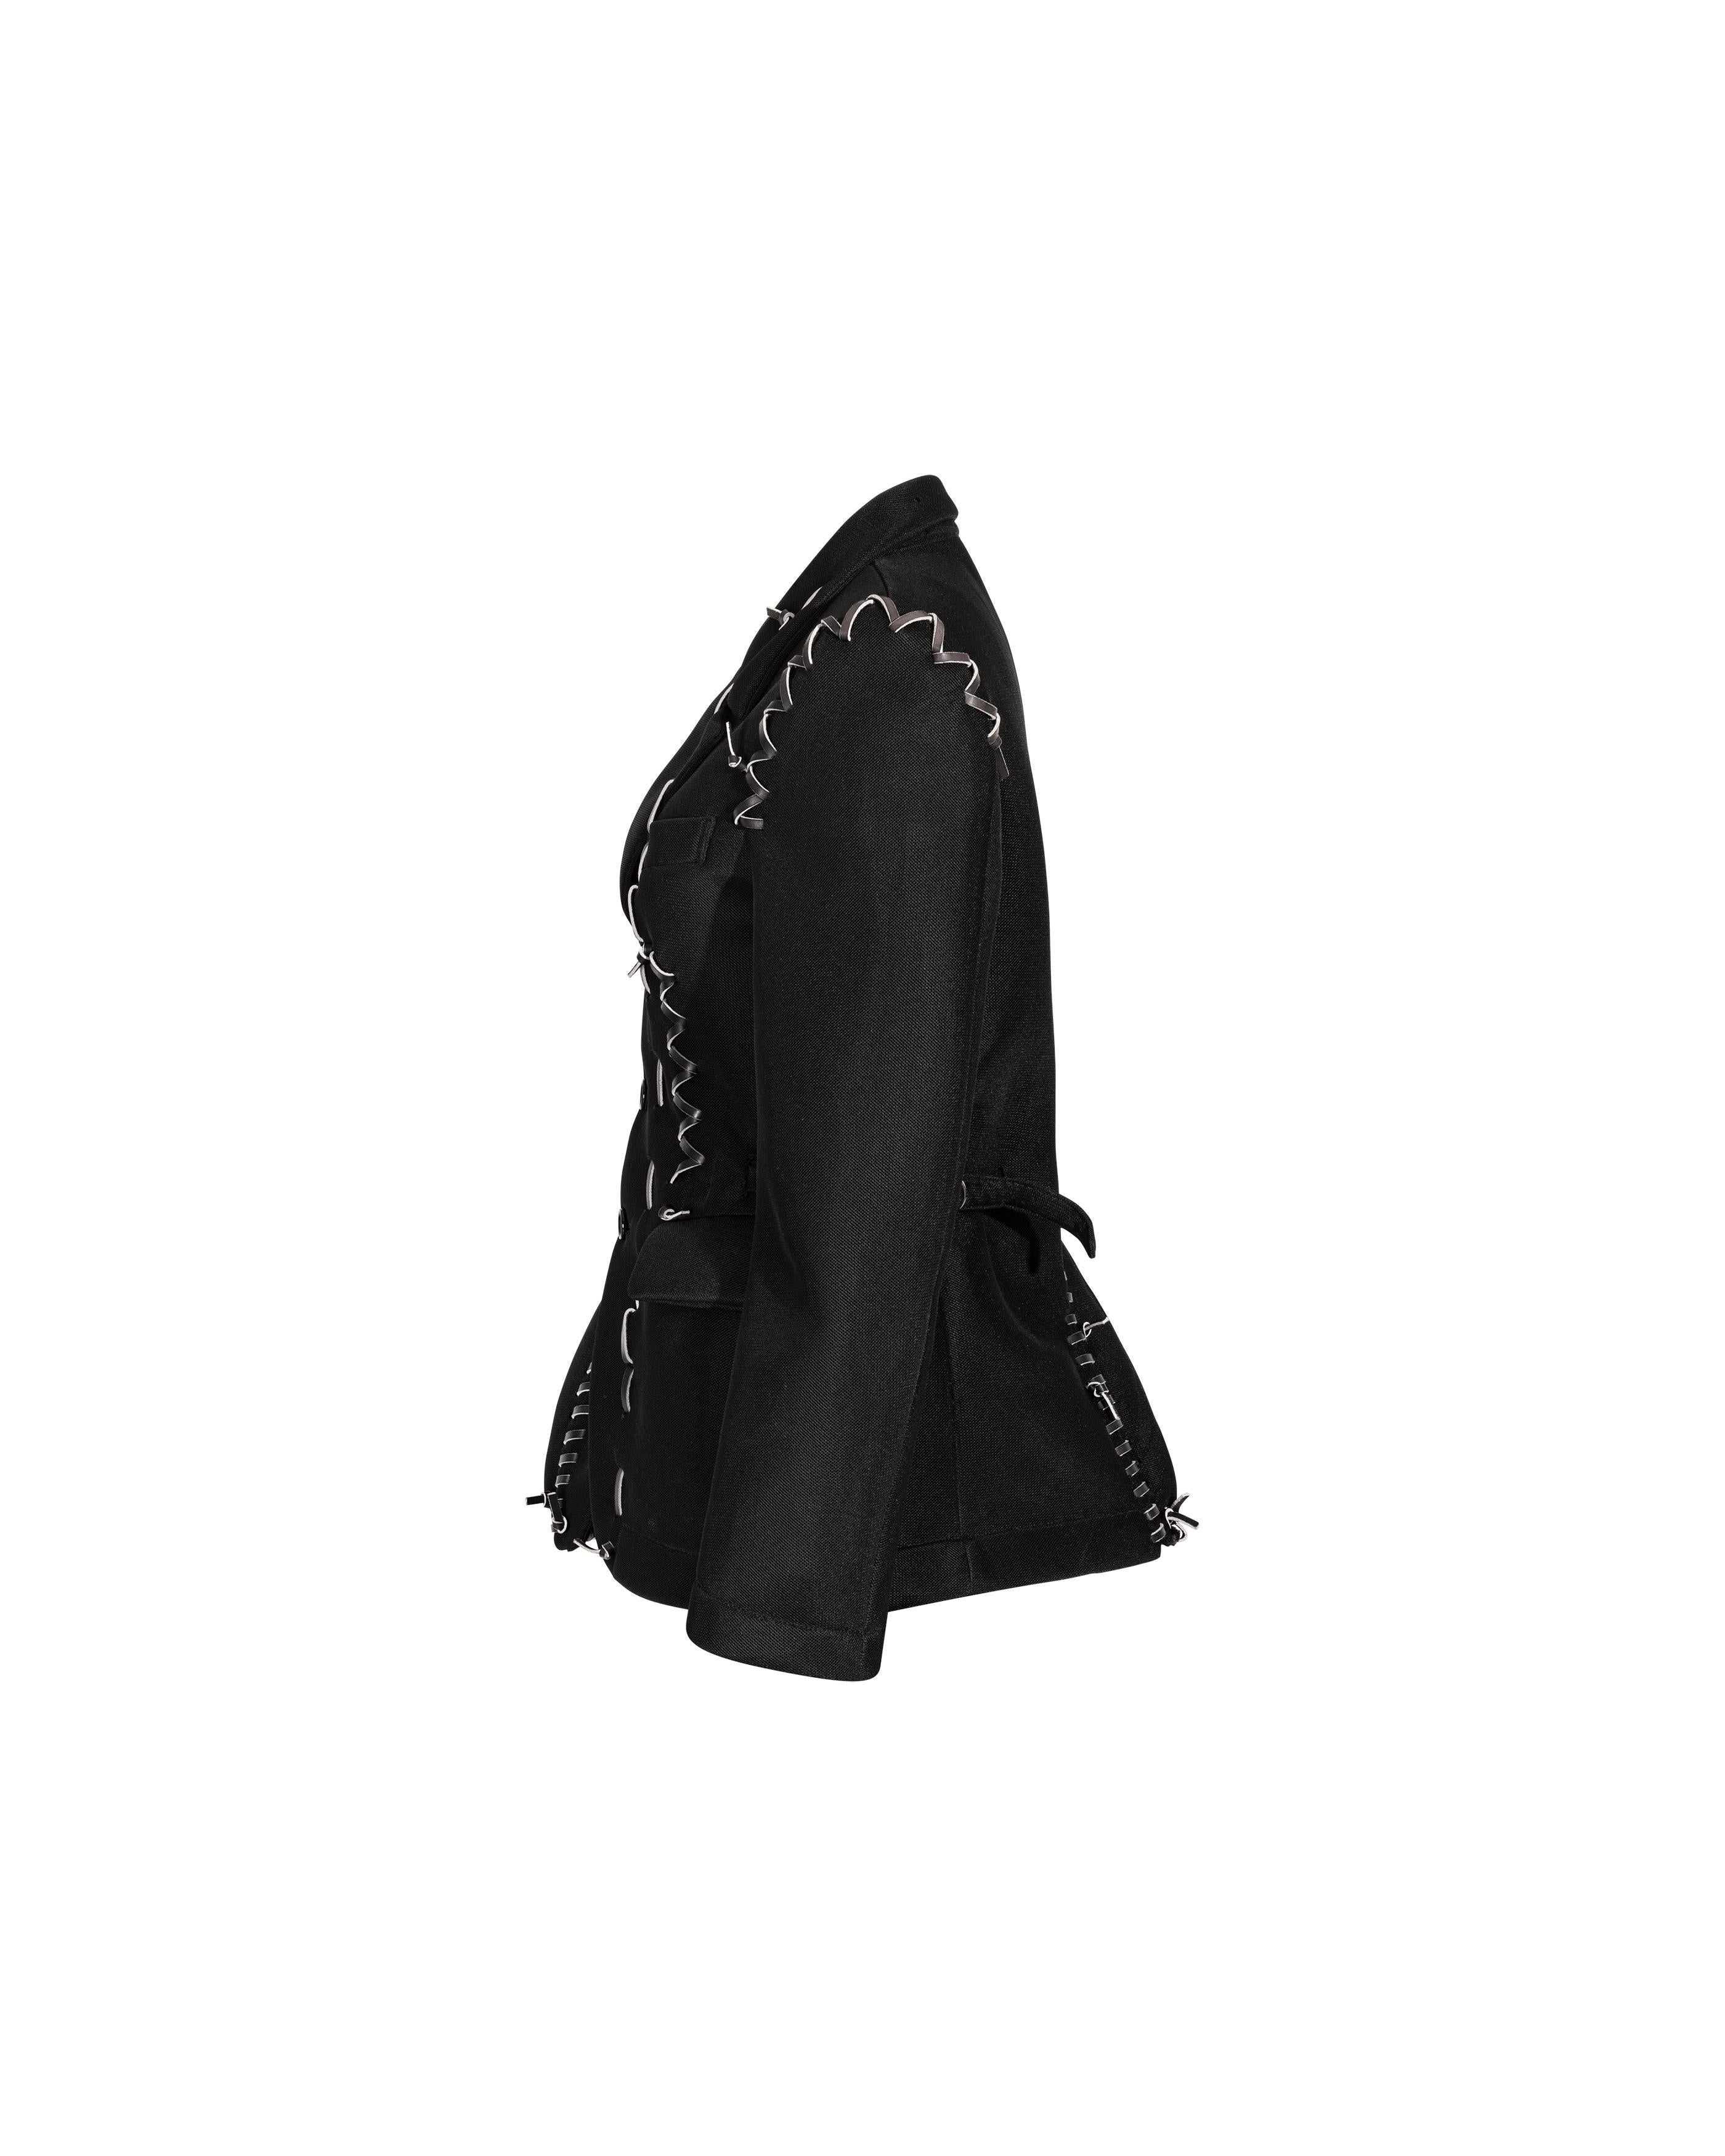 S/S 2005 Comme des Garcons Saddle Stitched Skirt Set For Sale 9